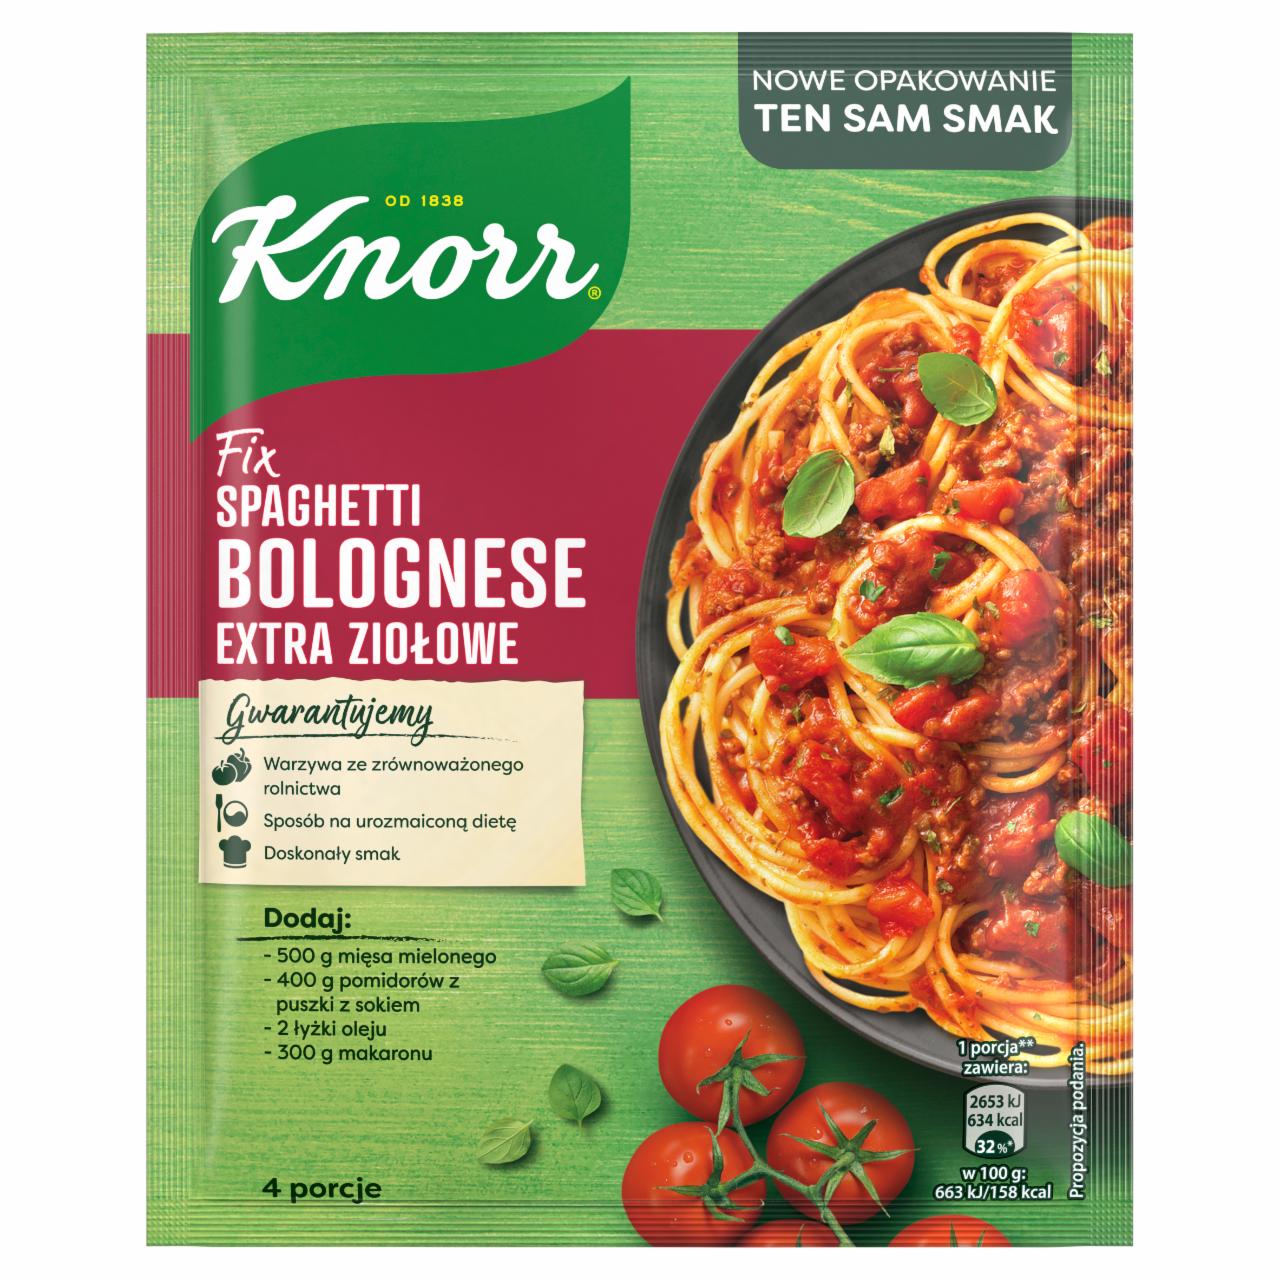 Zdjęcia - Knorr Fix spaghetti bolognese extra ziołowe 48 g